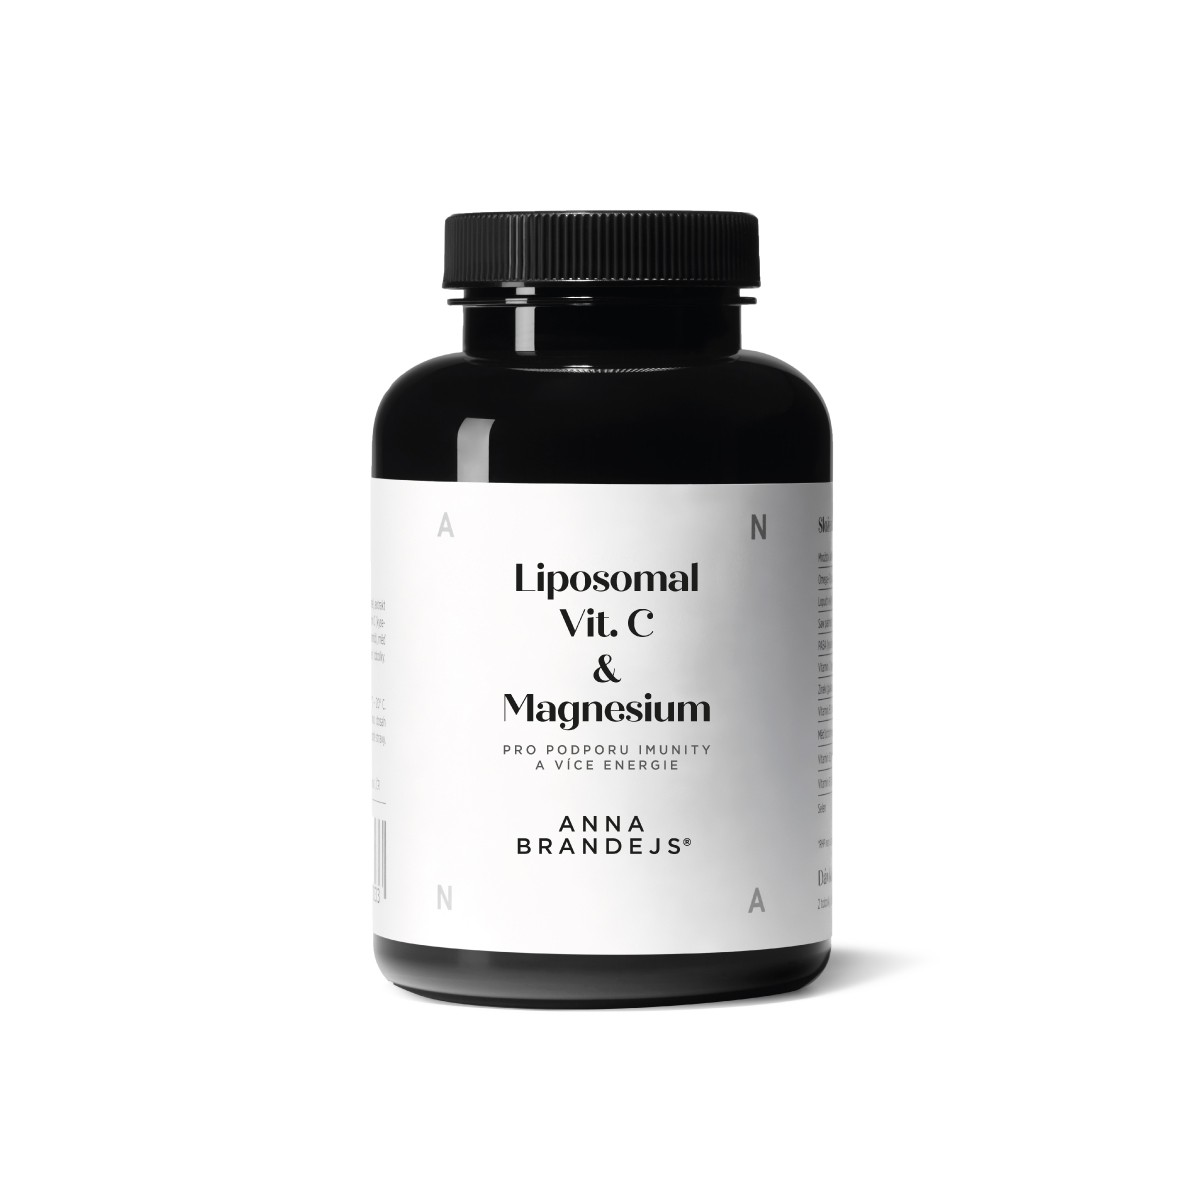 Liposomal Vit. C & Magnesium by ANNA BRANDEJS